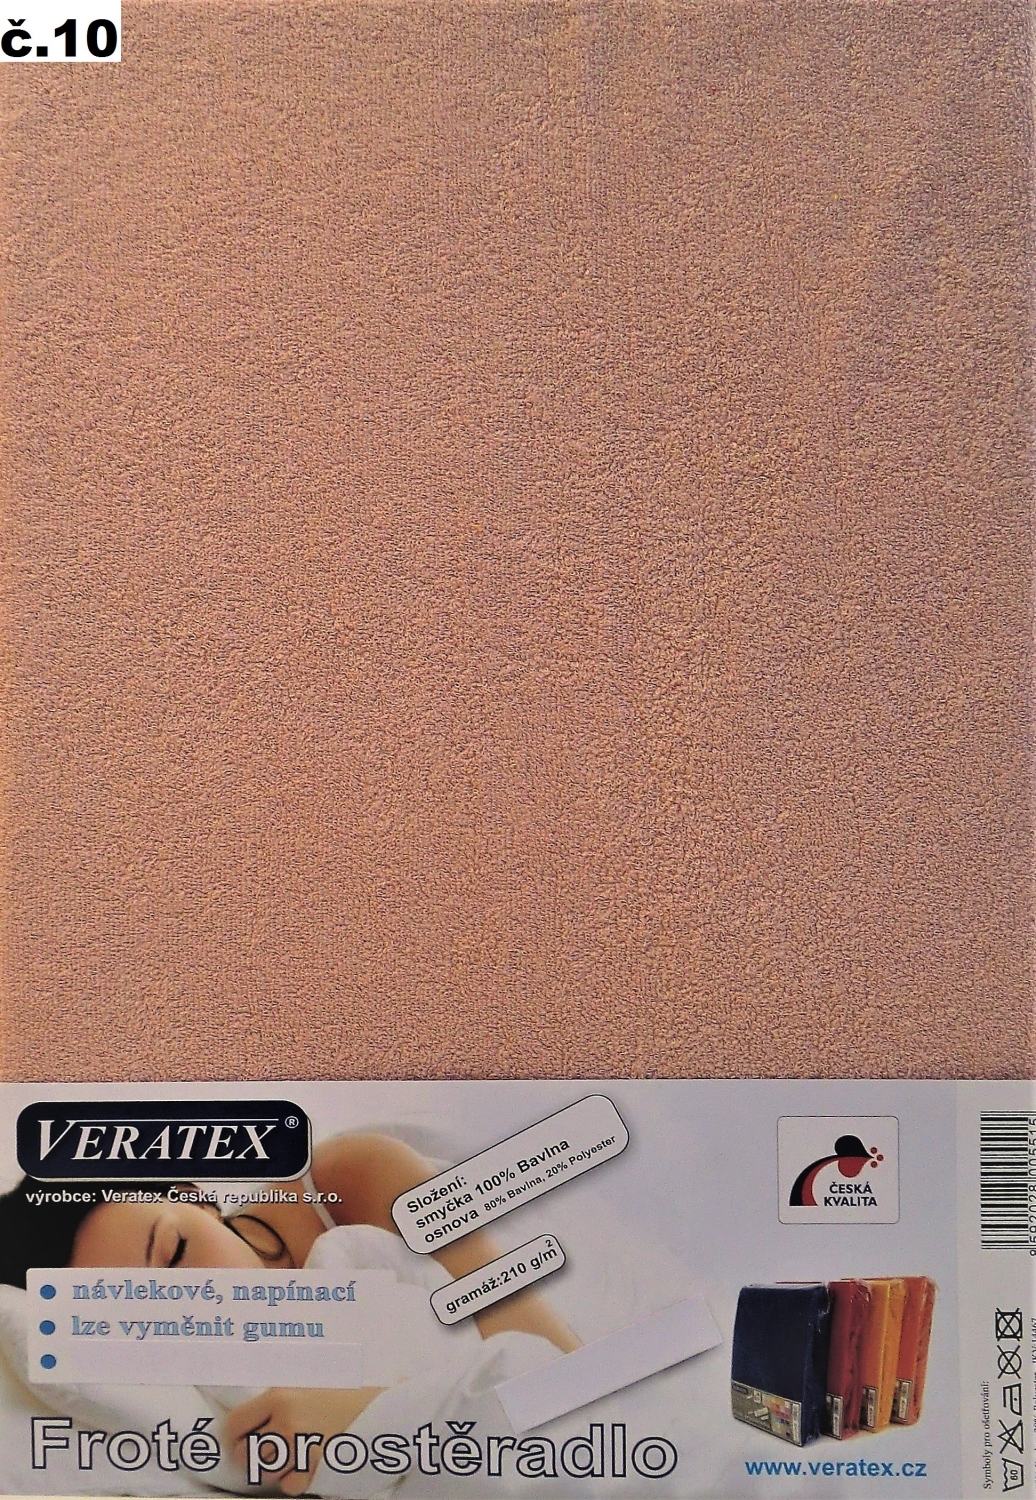 Veratex Froté prostěradlo 140x200/20 cm (č.10-starorůžová)